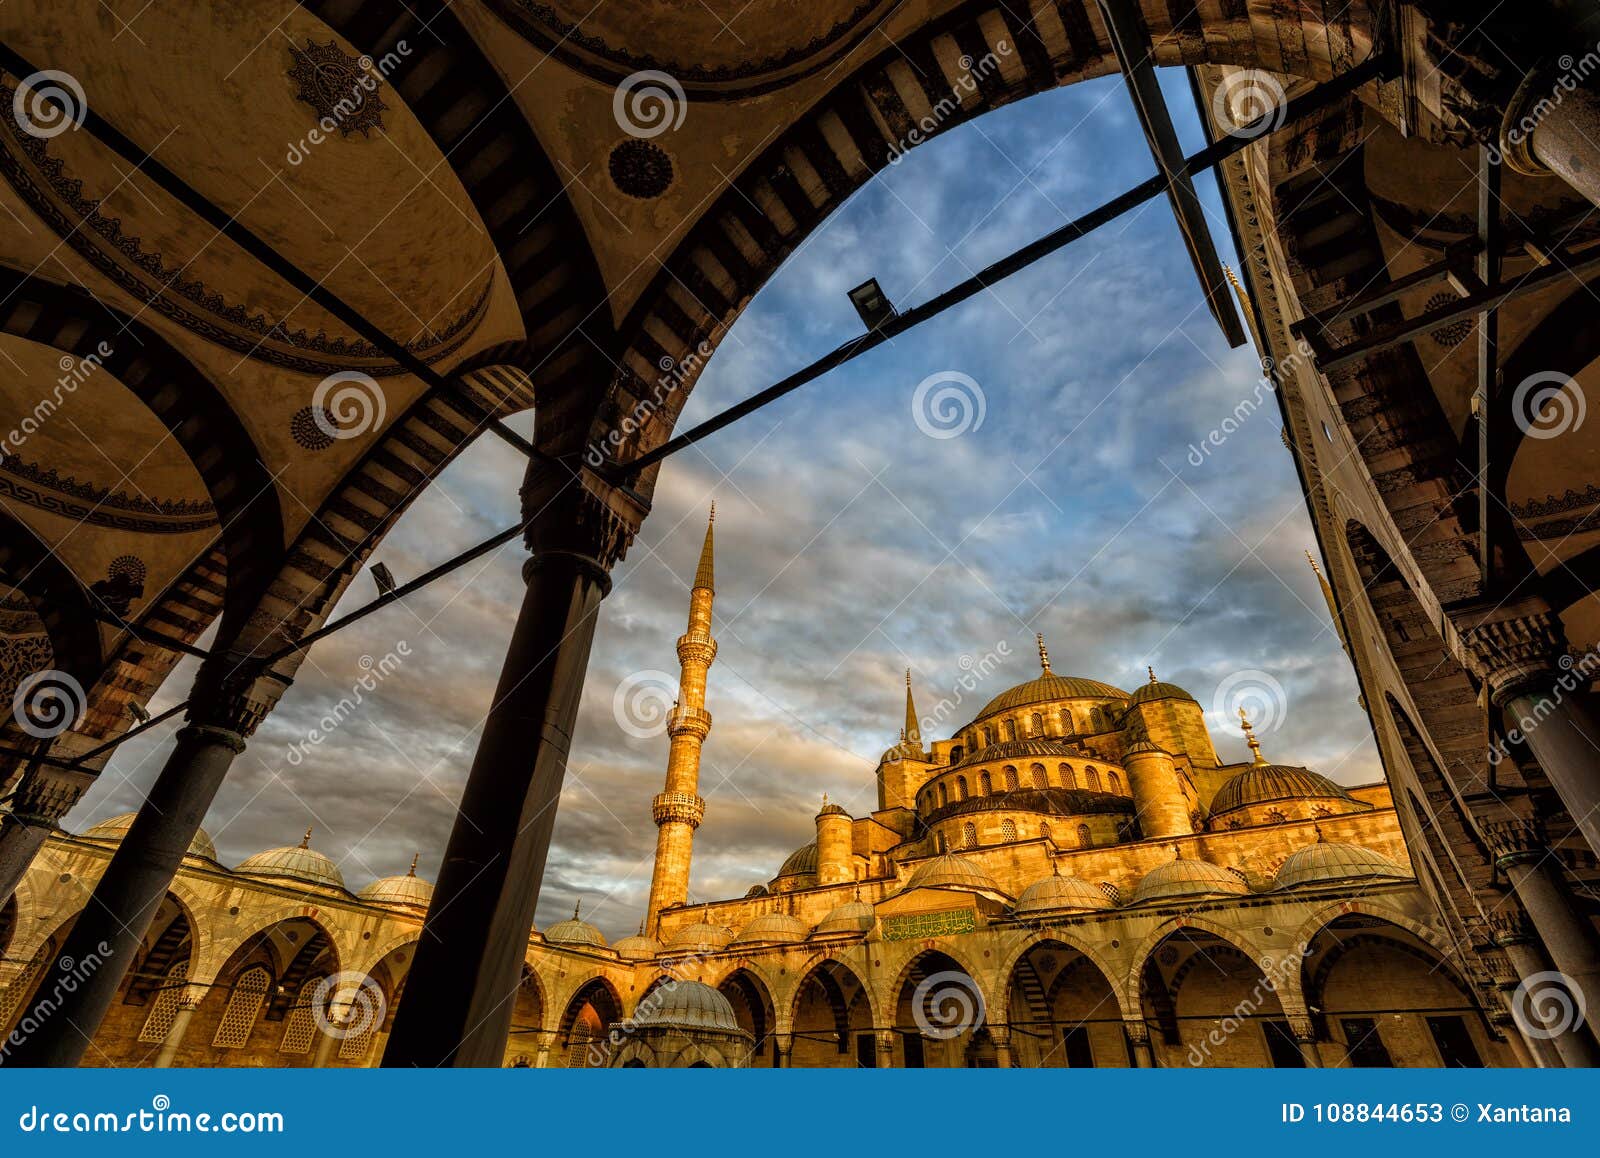 blue mosque, sultanahmet, istanbul, turkey